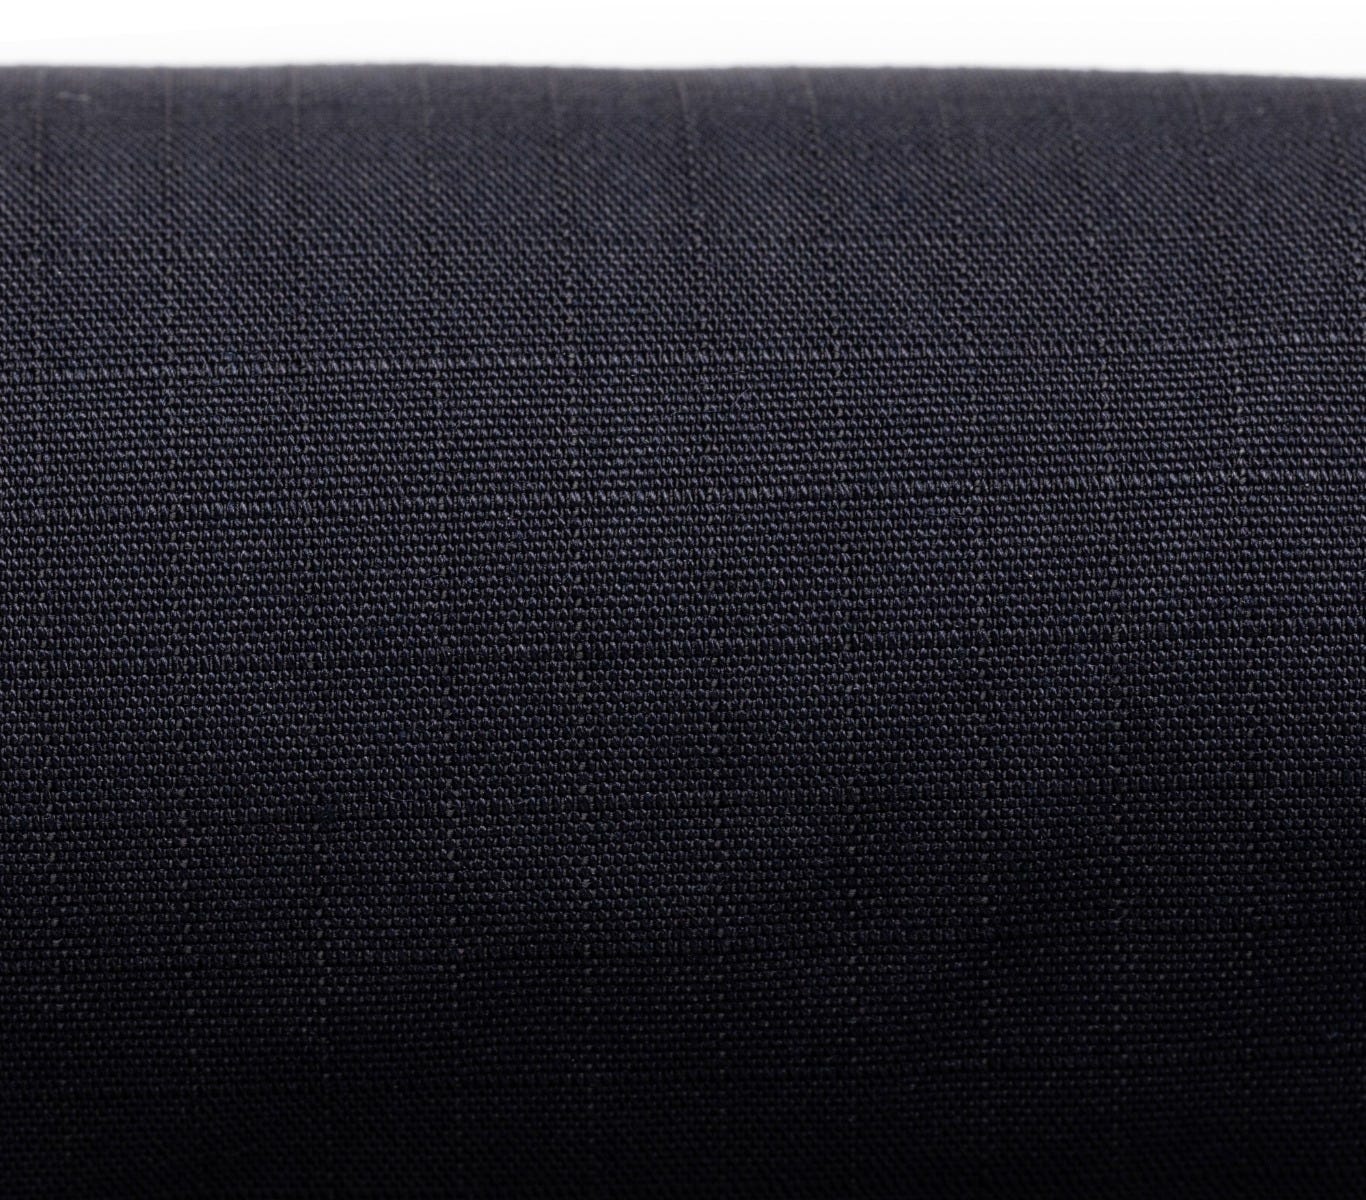 a closeup photo of ripstop fabric.